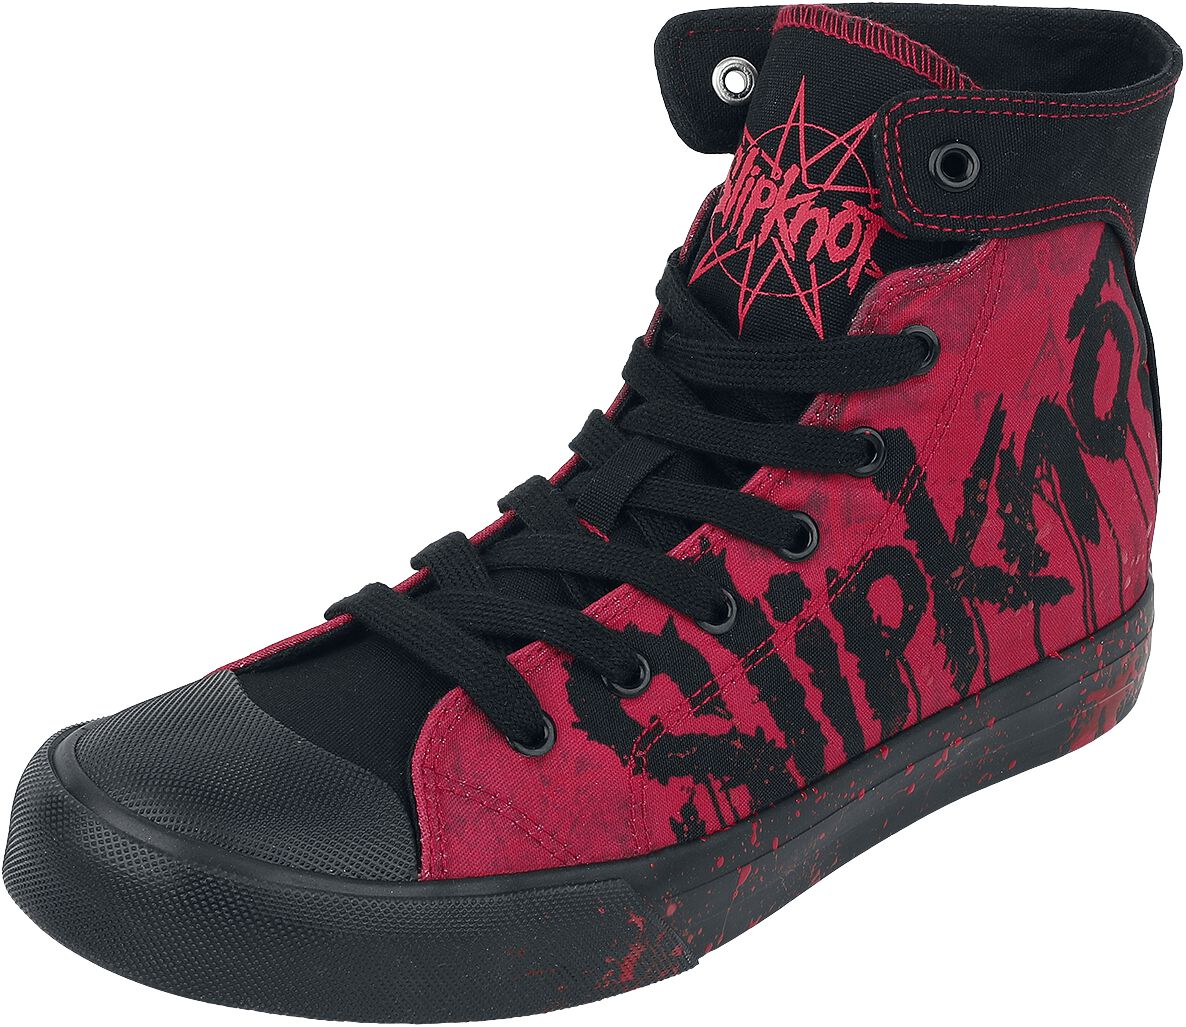 Slipknot Sneaker high - EMP Signature Collection - EU37 bis EU42 - Größe EU39 - schwarz/rot  - EMP exklusives Merchandise! von Slipknot